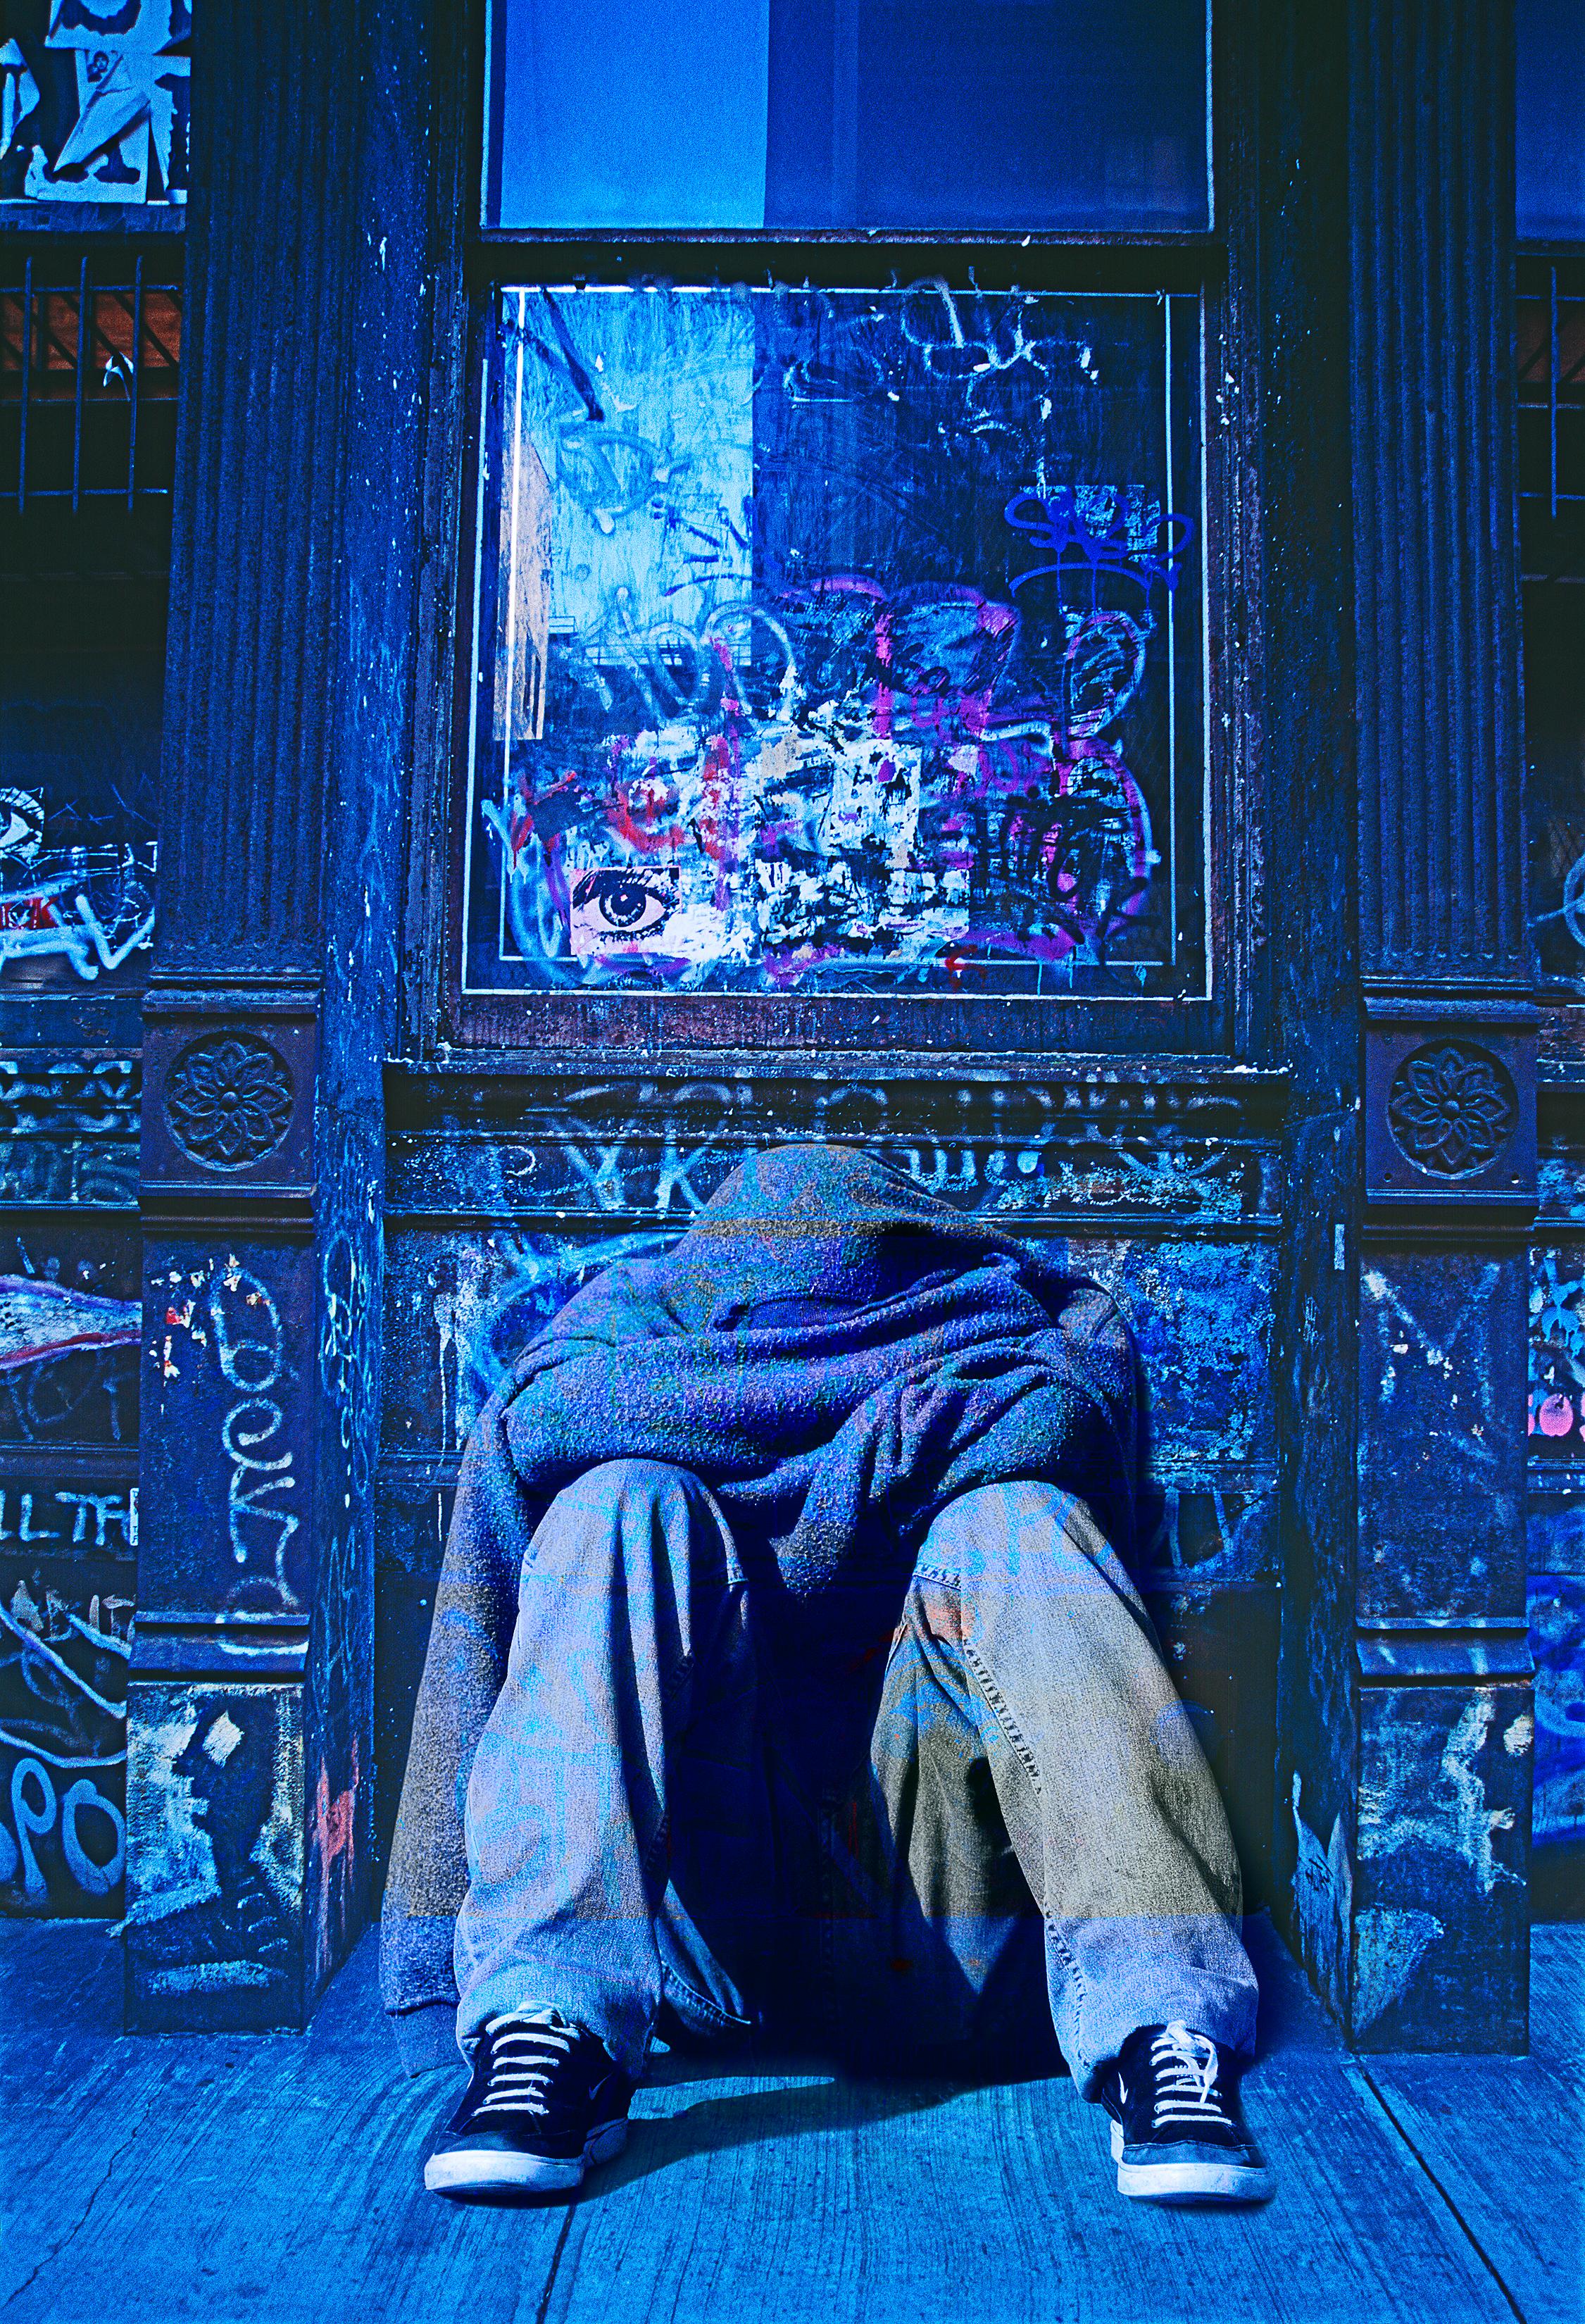 Mitchell Funk Abstract Photograph - Urban Melancholy Blue.  Motionless Young Man,  Graffiti  Wall in Soho